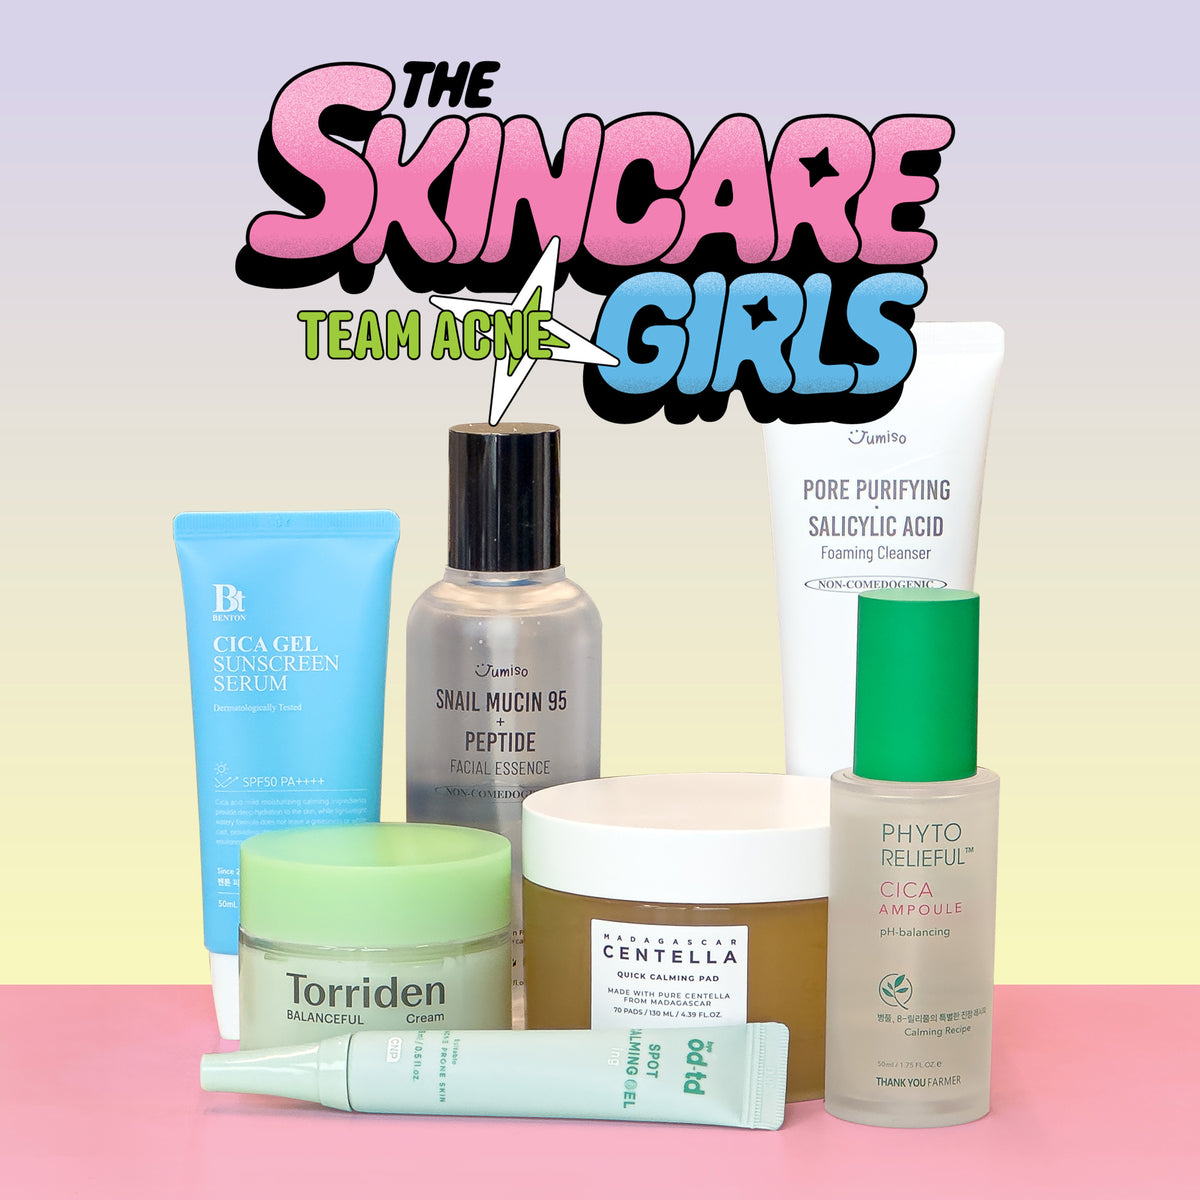 The Skincare Girls Box: Team Acne